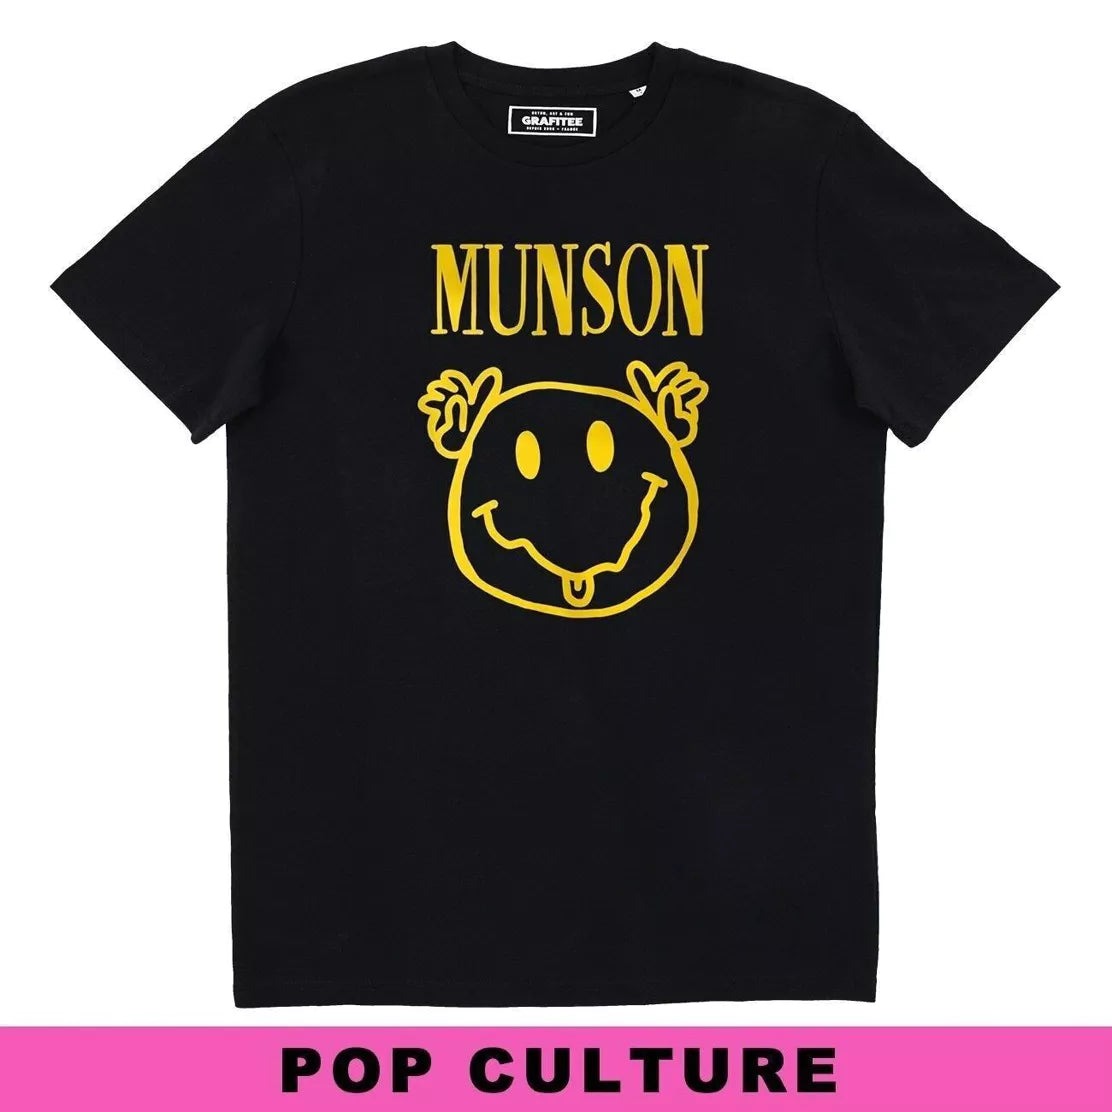 Munson (Nirvana Style) Stranger Things T-Shirt